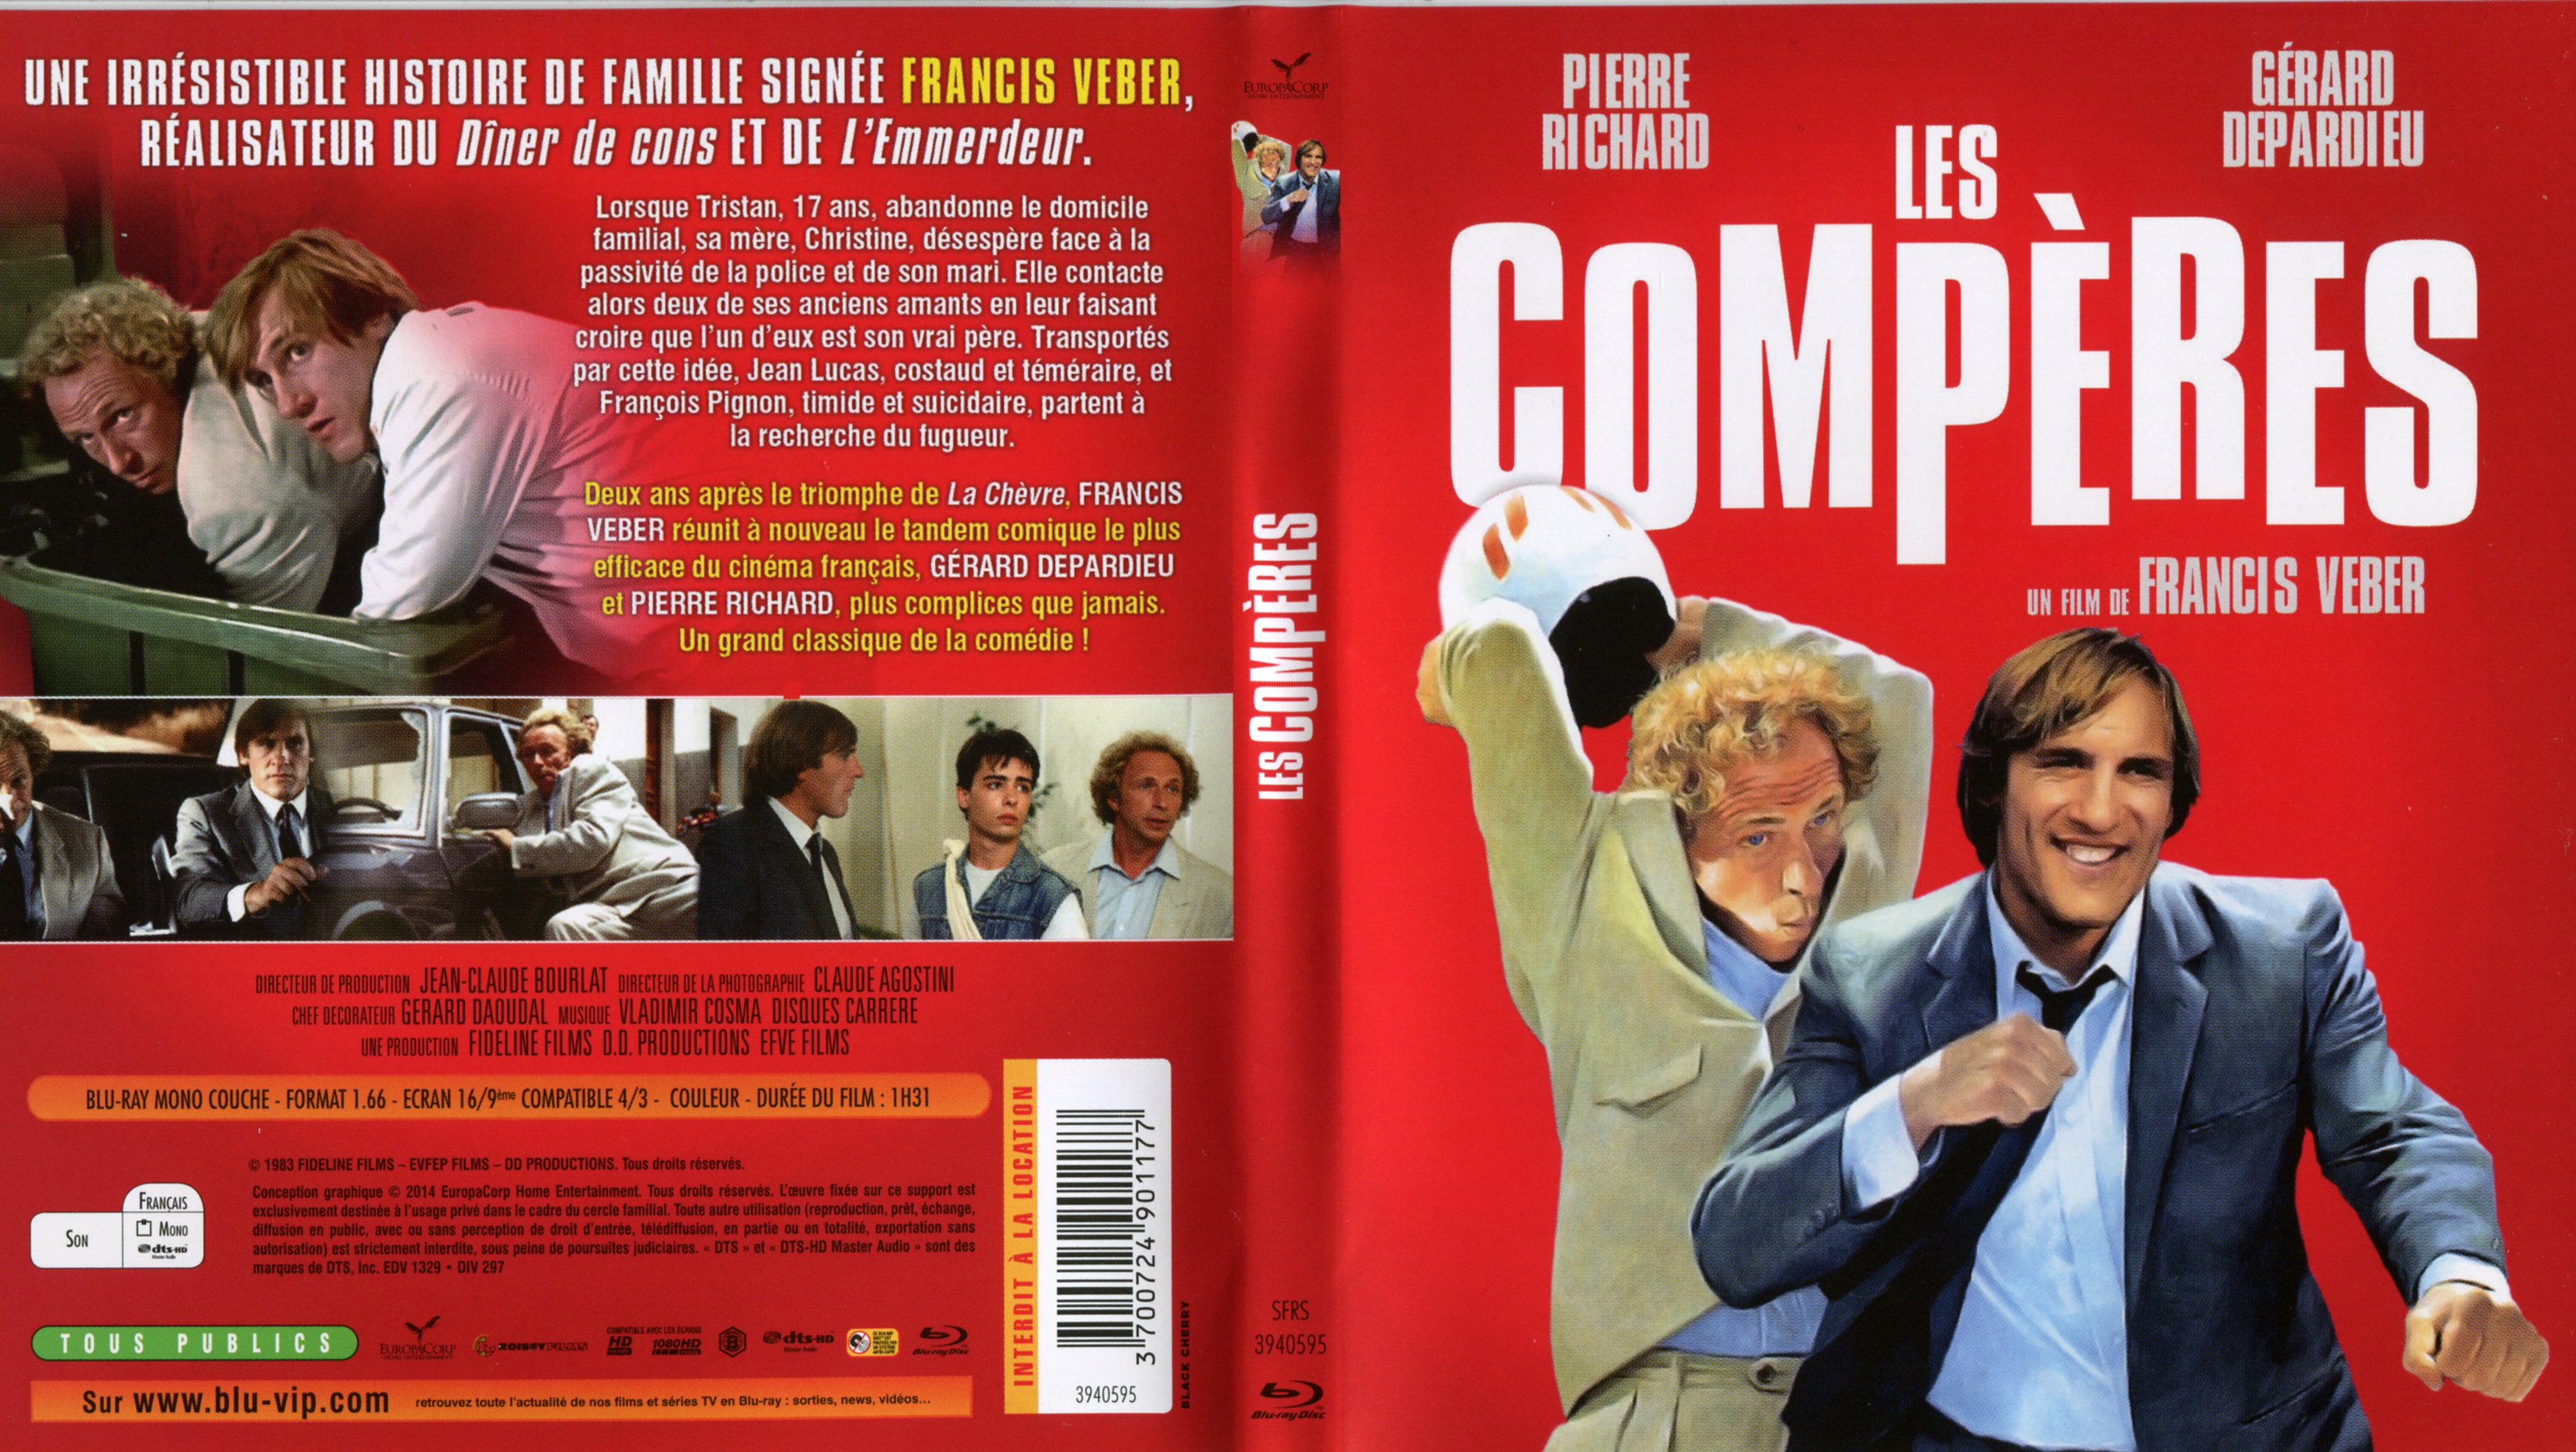 Jaquette DVD Les compres (BLU-RAY)